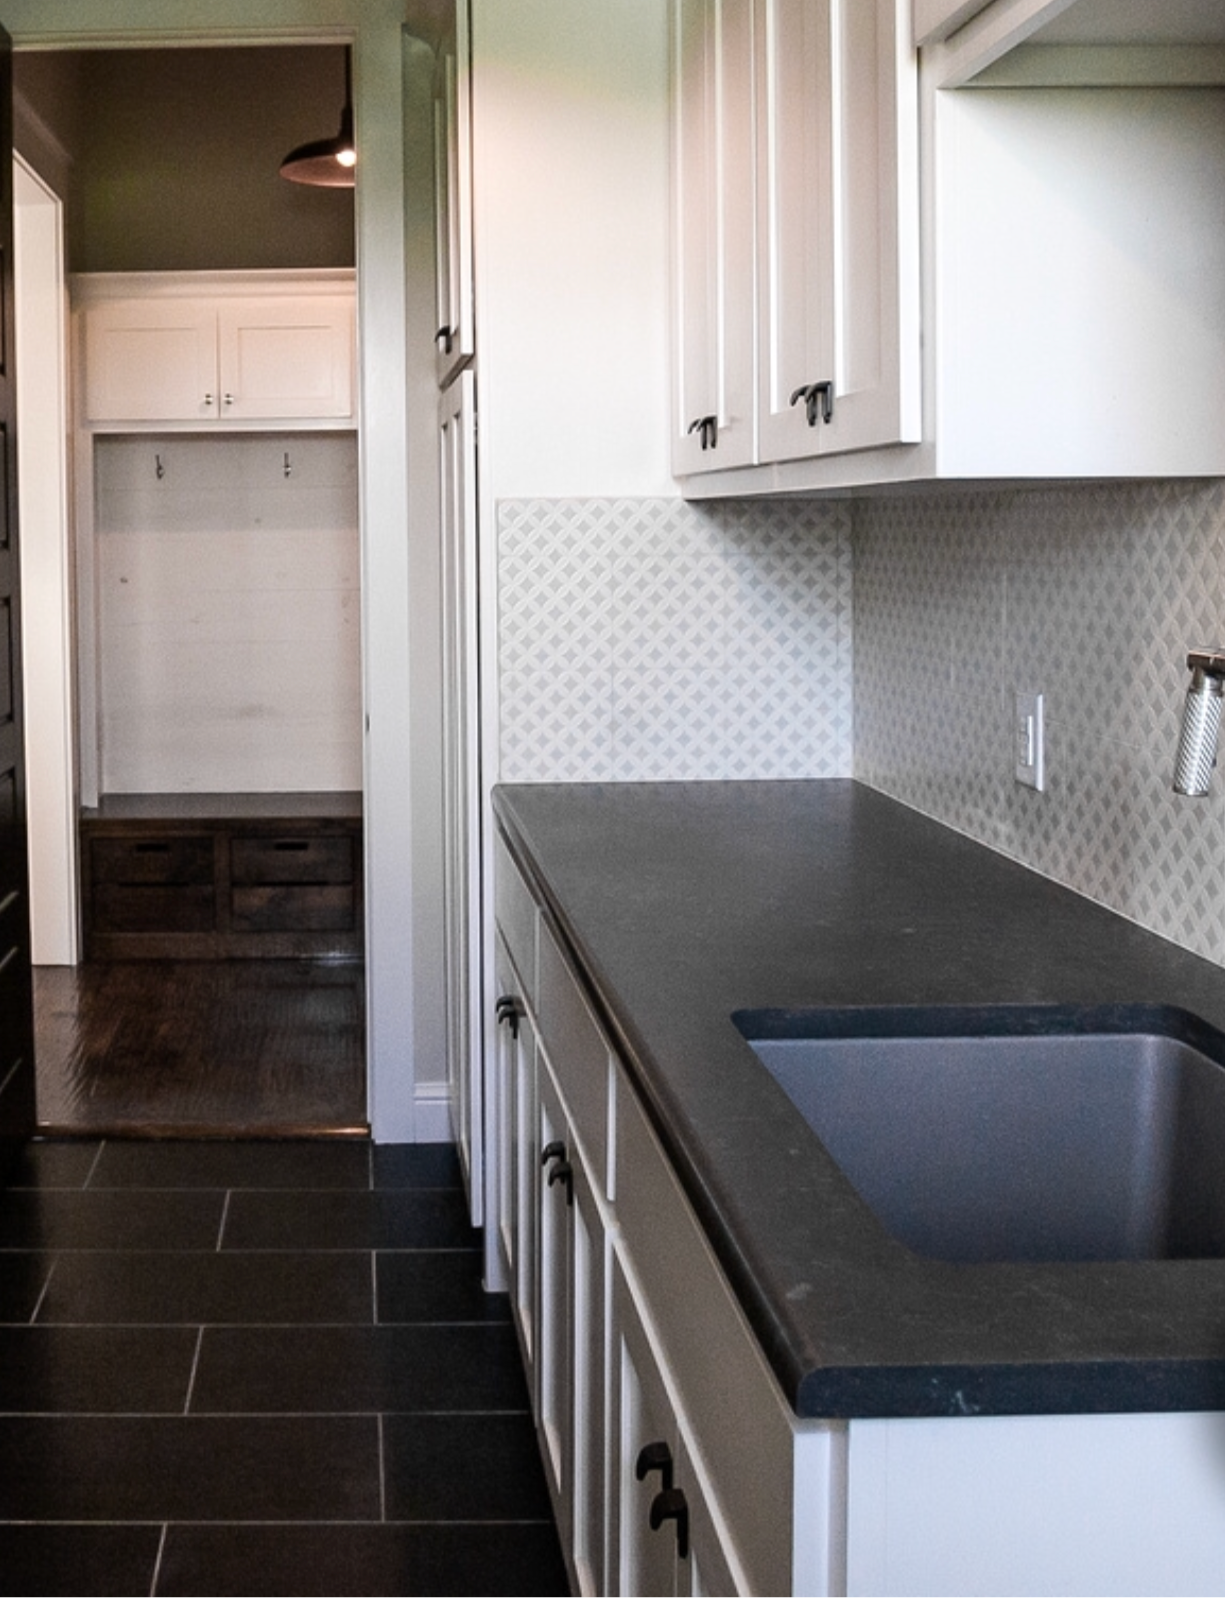 The Design House - Flooring, Countertops & Remodeling Denton (940)382-4340